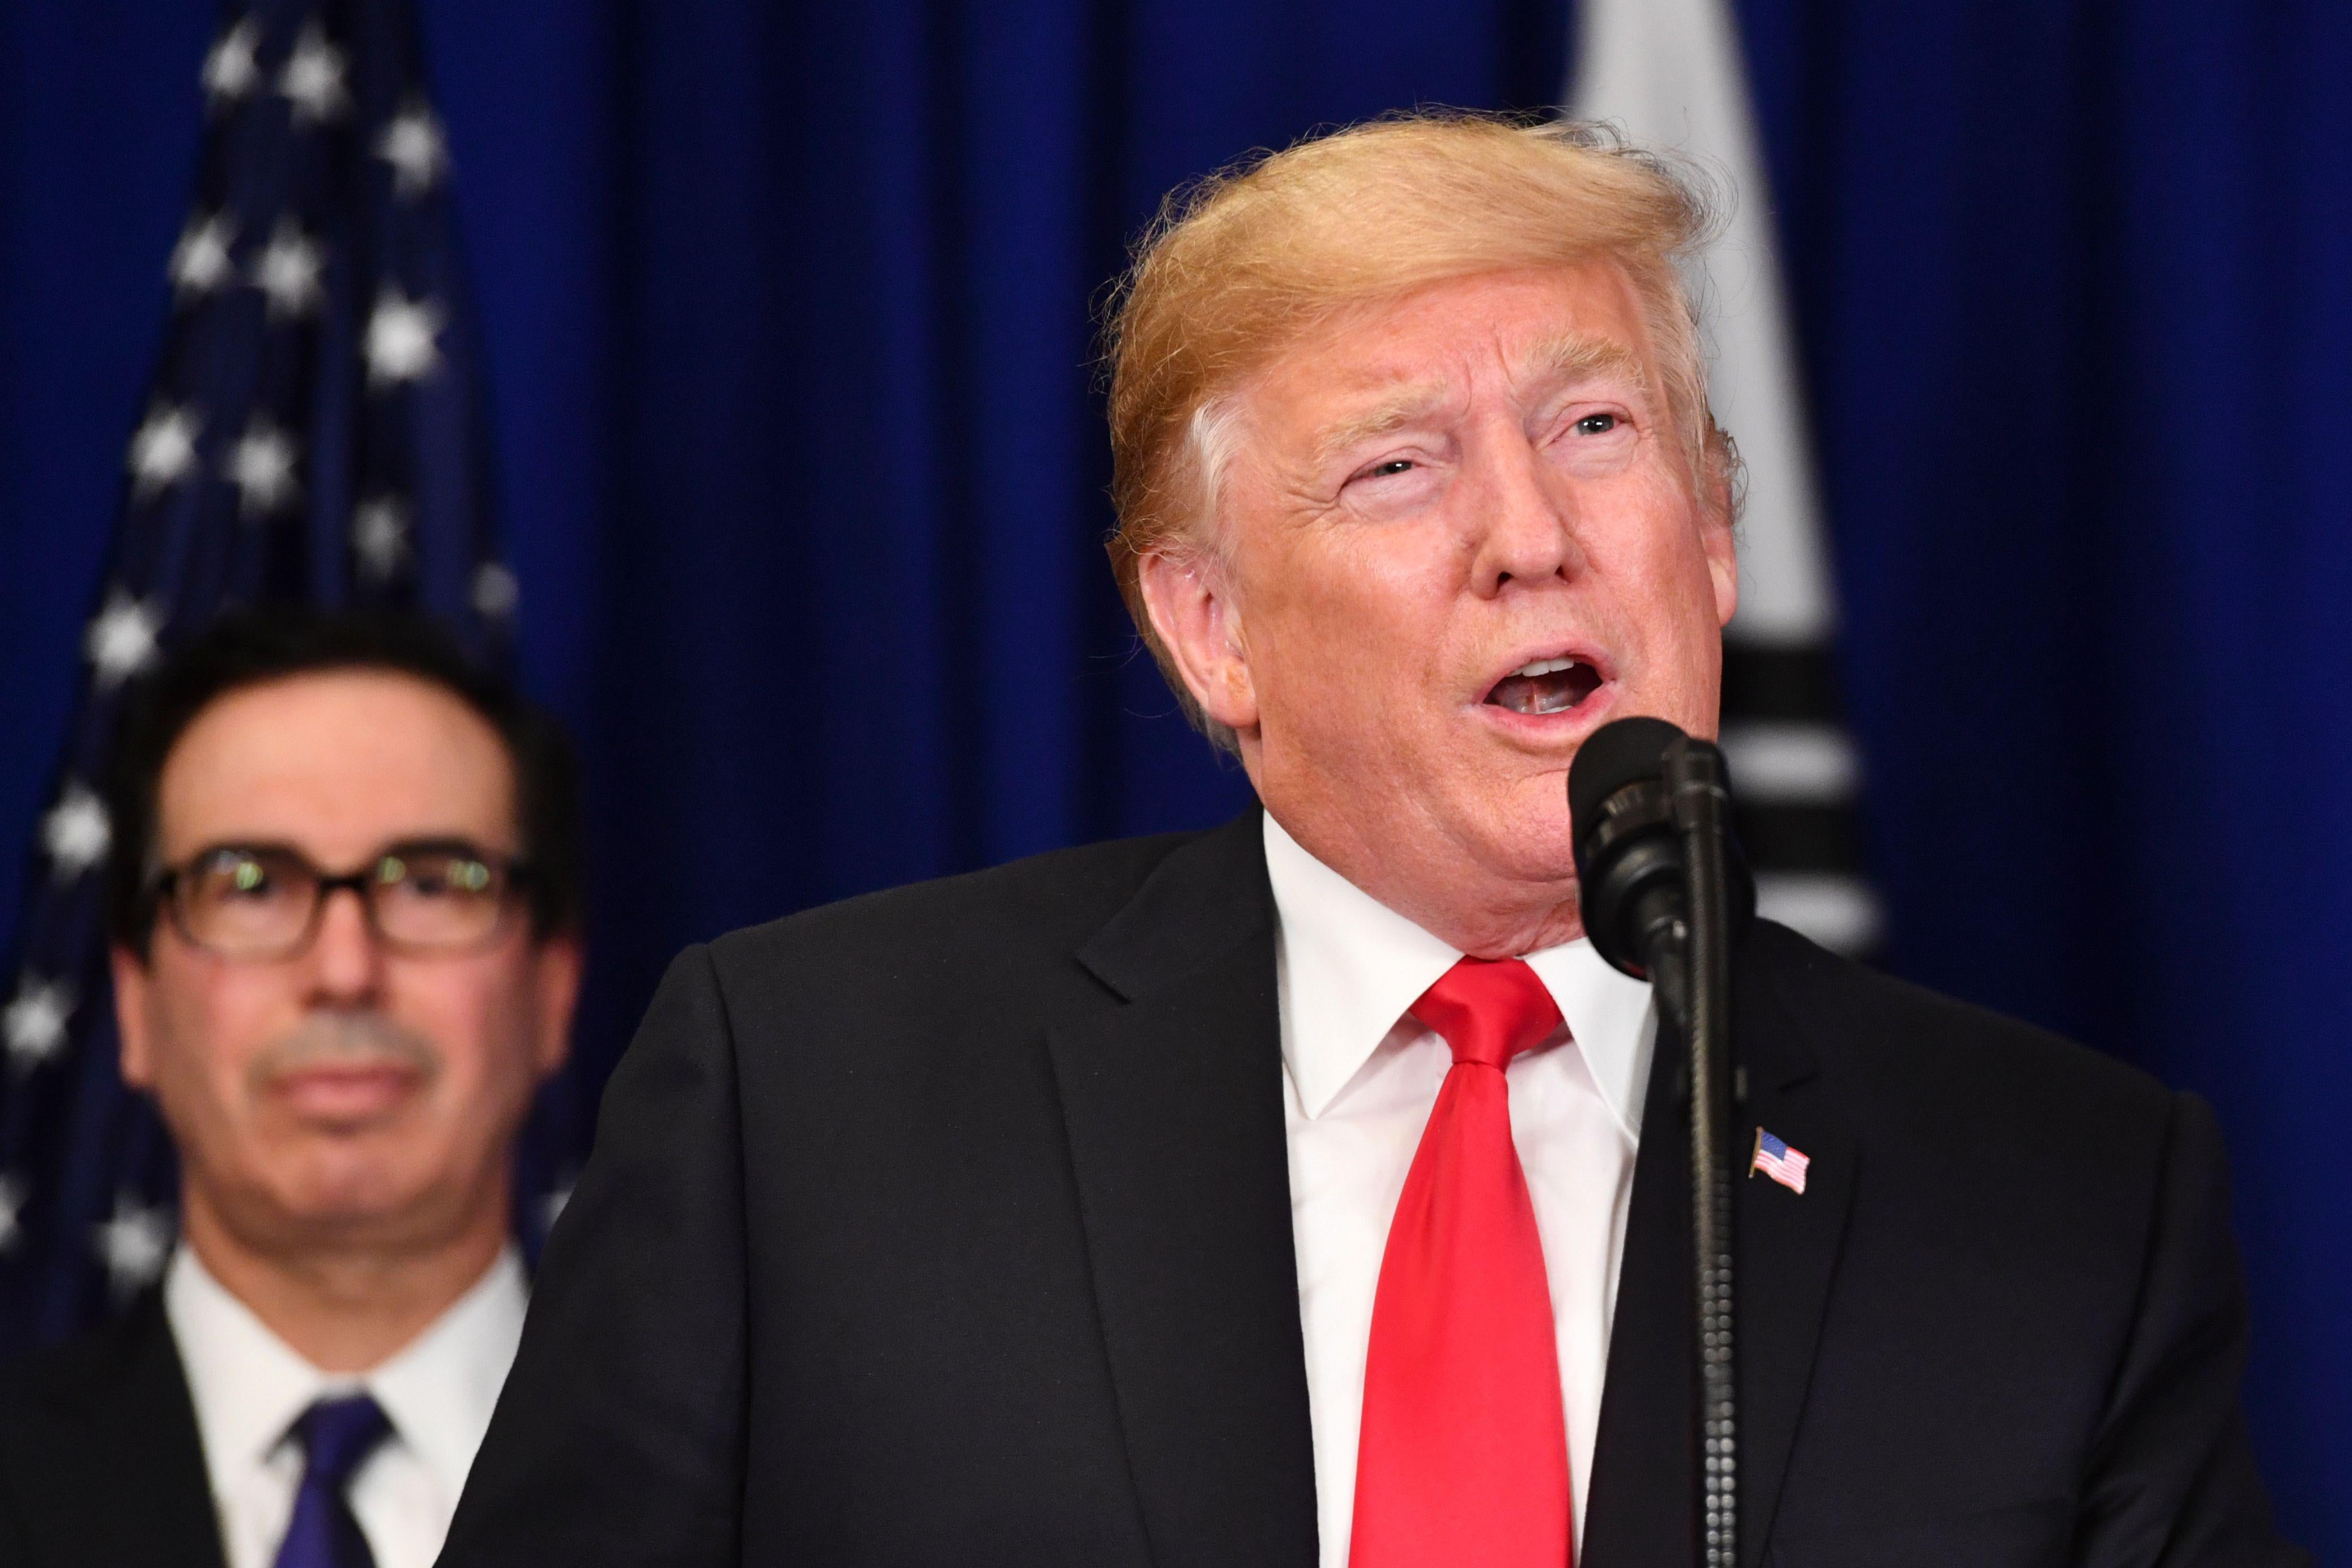 President Donald Trump speaks after a bilateral meeting as Treasury Secretary Steven Mnuchin looks on in New York on September 24, 2018.